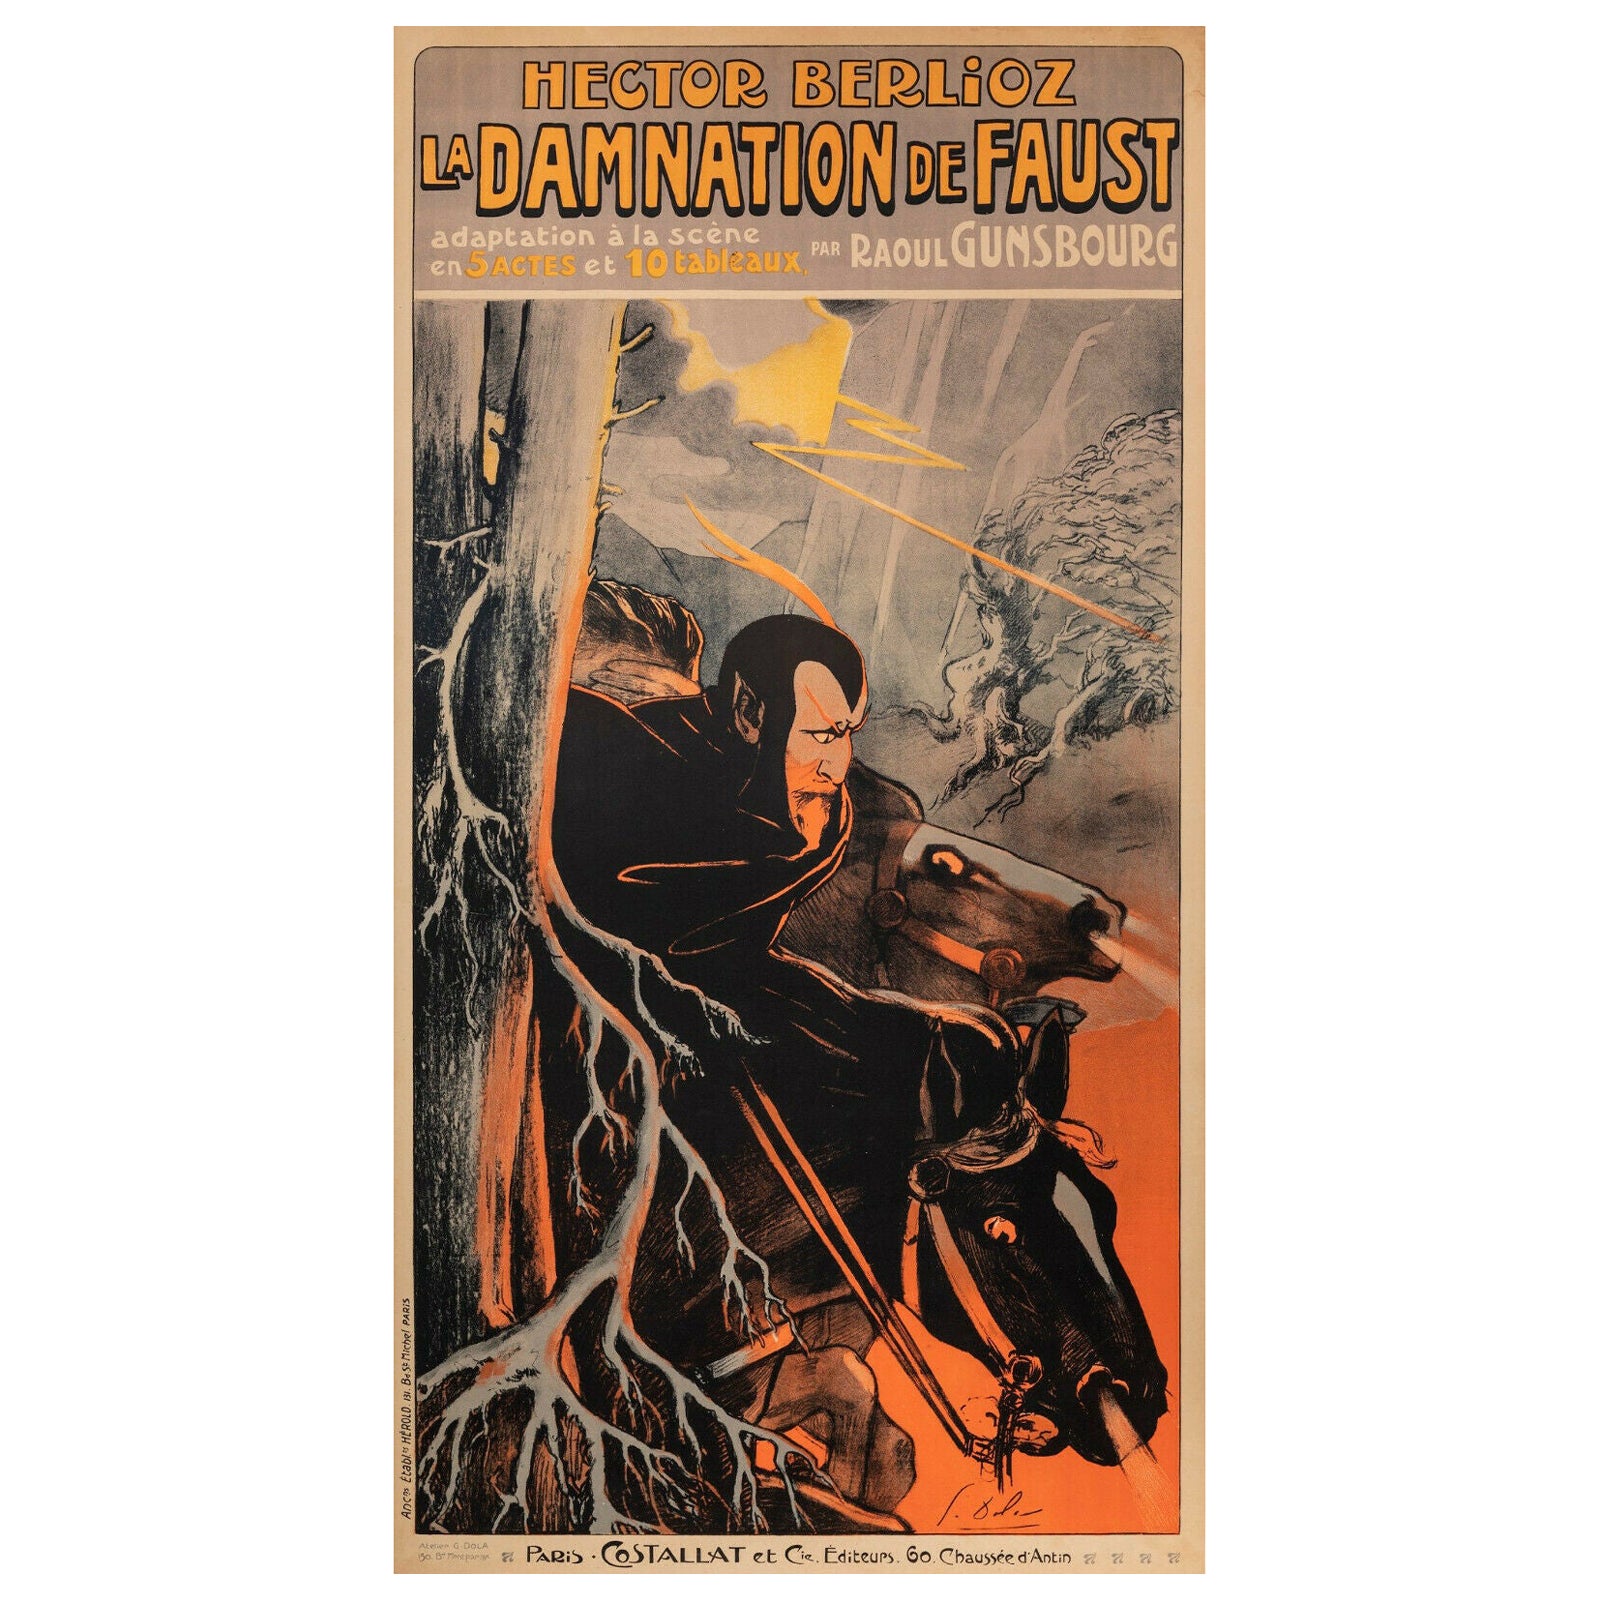 Original Poster-Georges Dola-Damnation De Faust-Théatre-Opera, 1893